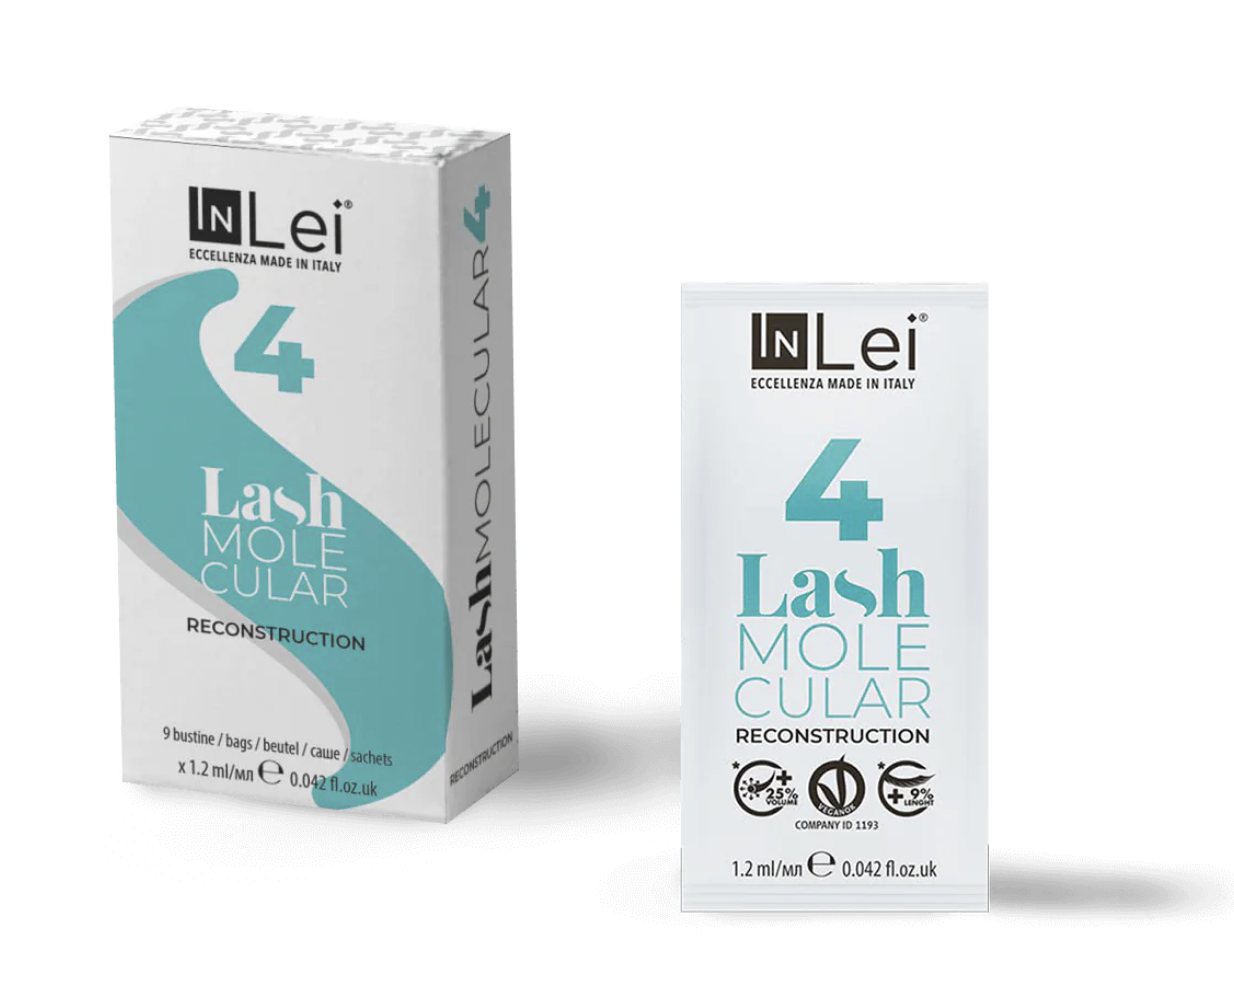 InLei® “LASH MOLECULAR 4” rekonstrukcja molekularna opakowanie 6×1,2ml